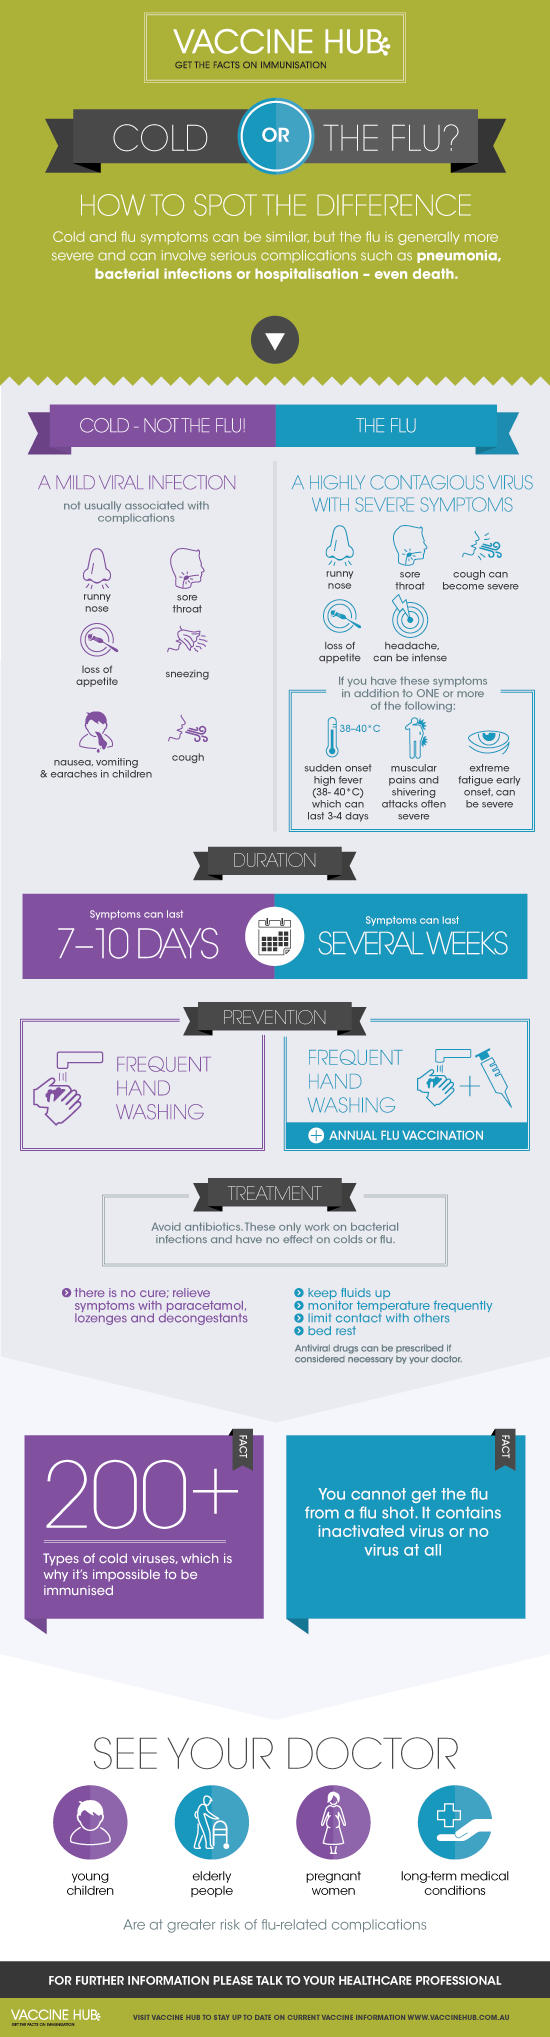 Vaccine Hub Flu Infographic